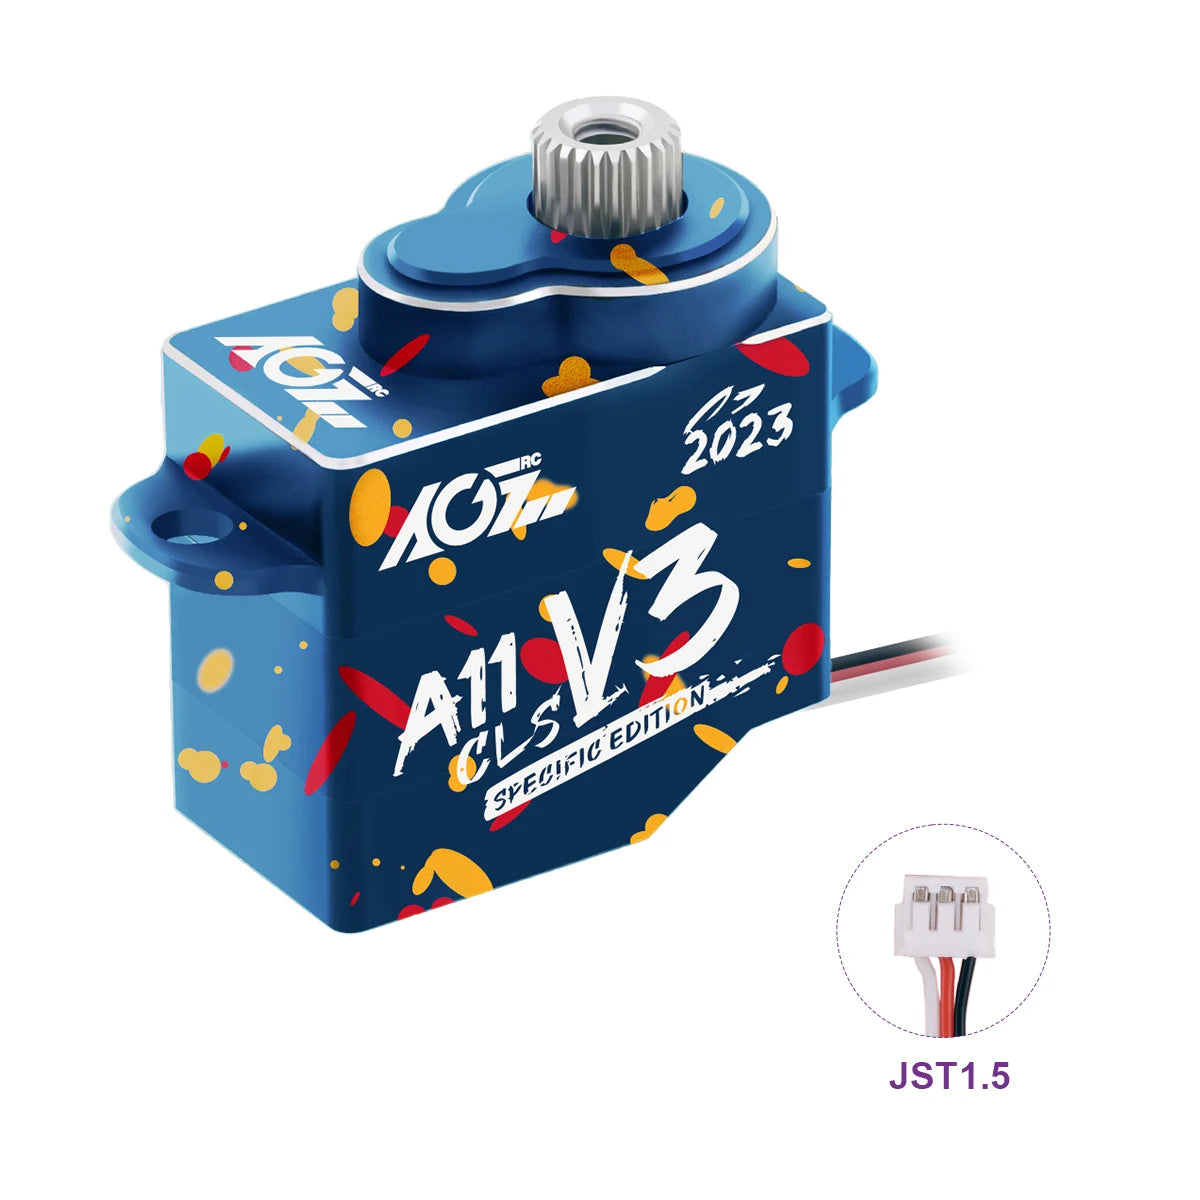 AGFRC A11CLS V3 Anniversary Edition, Iac KO1 JST1.5 2623 All3 EDitiONE 